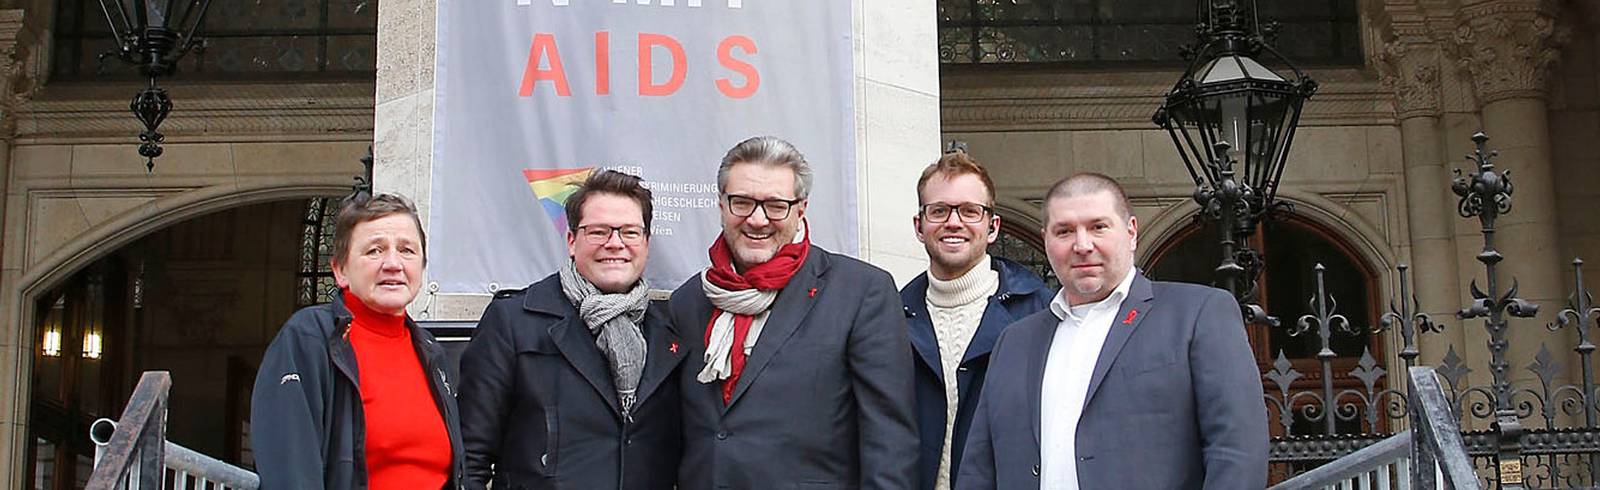 Welt-Aids-Tag: Red Ribbon am Rathaus angebracht